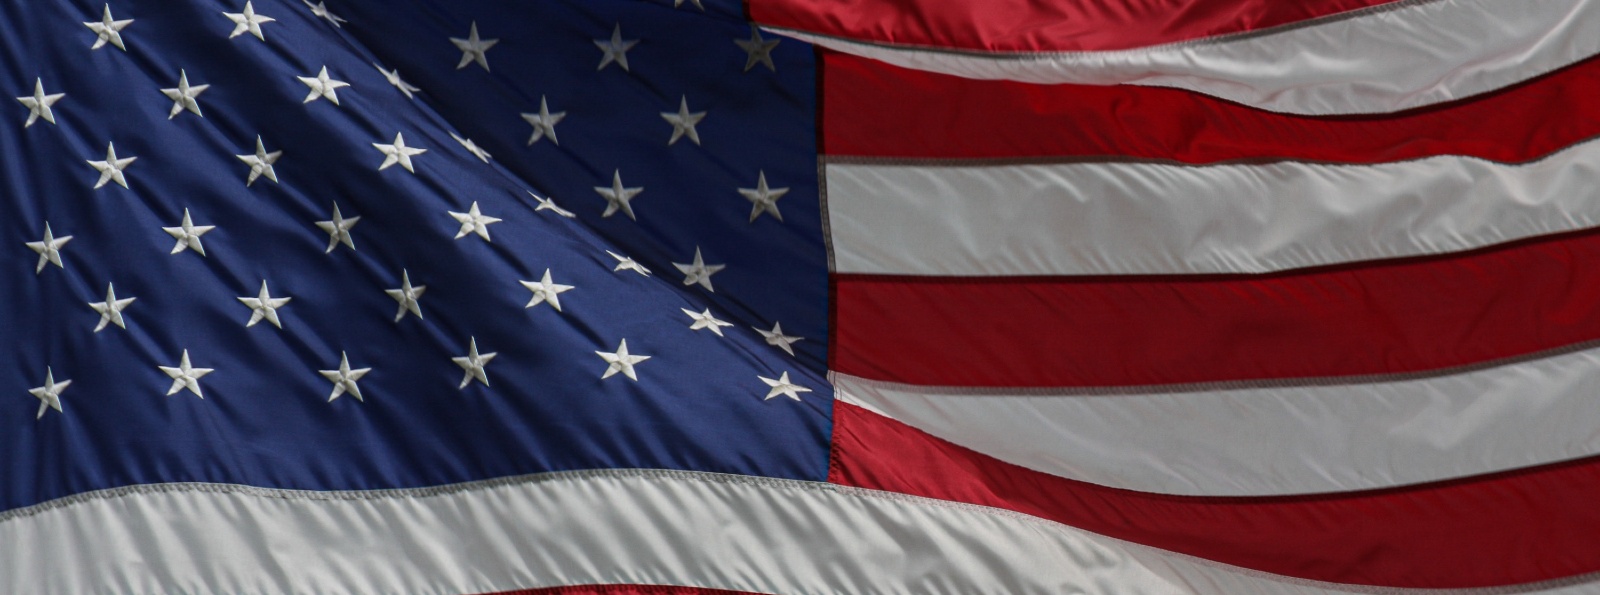 United States of America stars and stripes flag